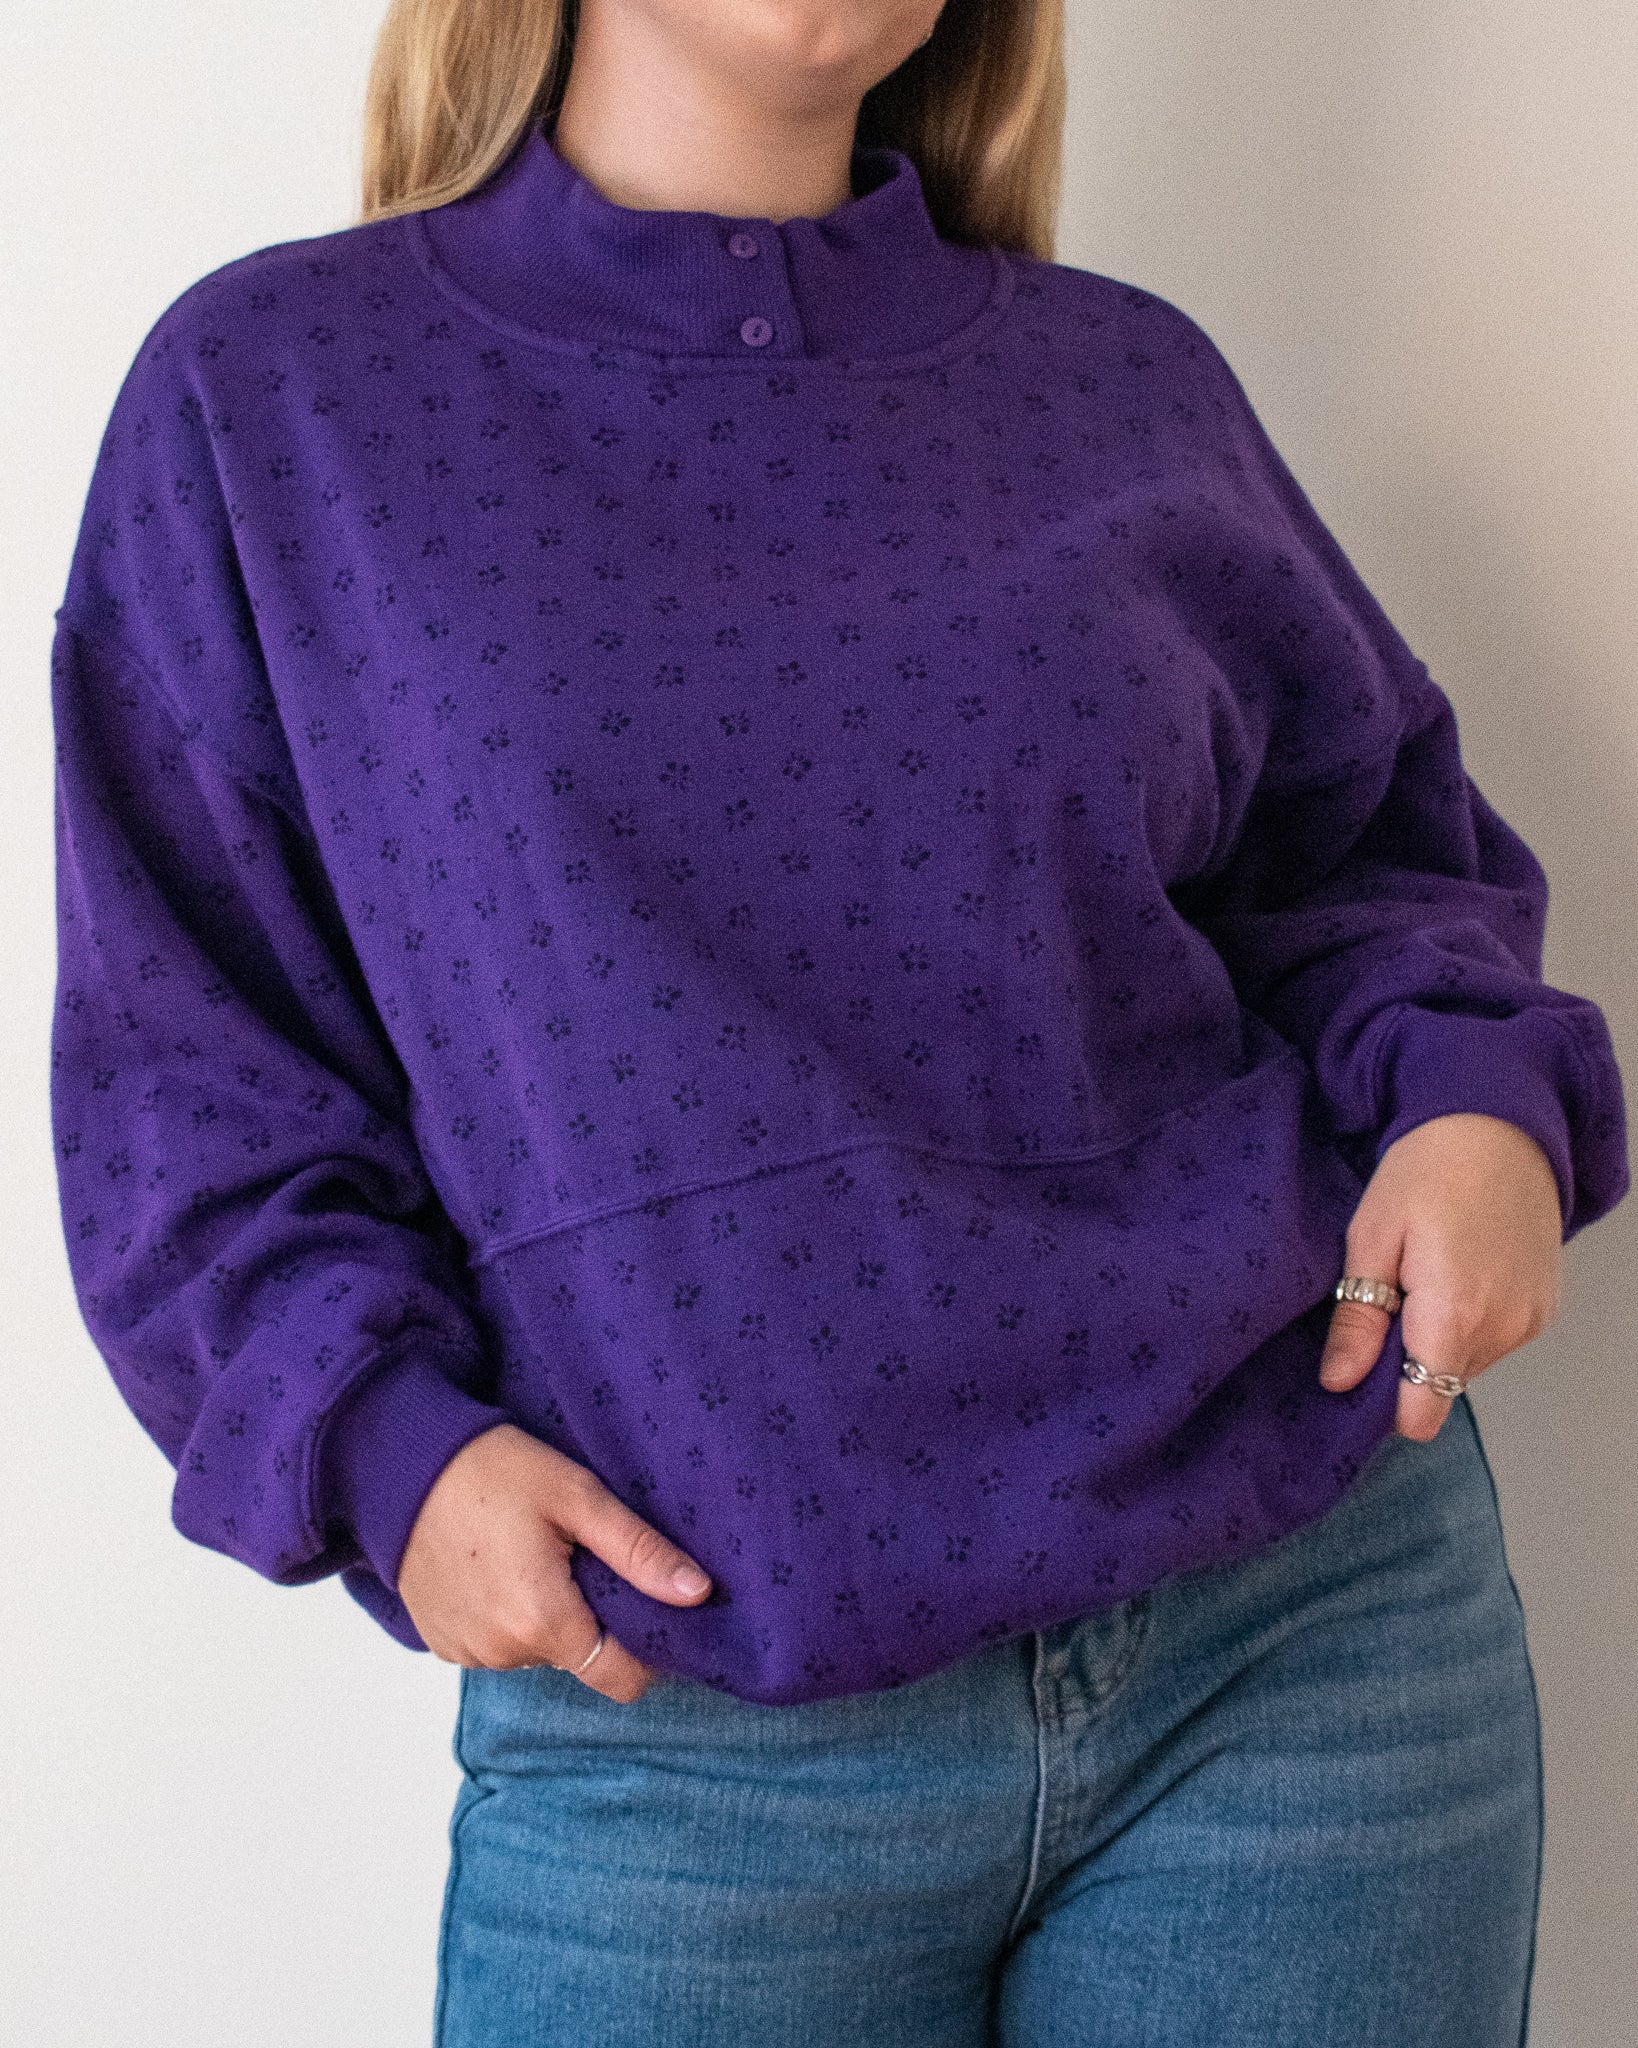 Purple sweatshirt